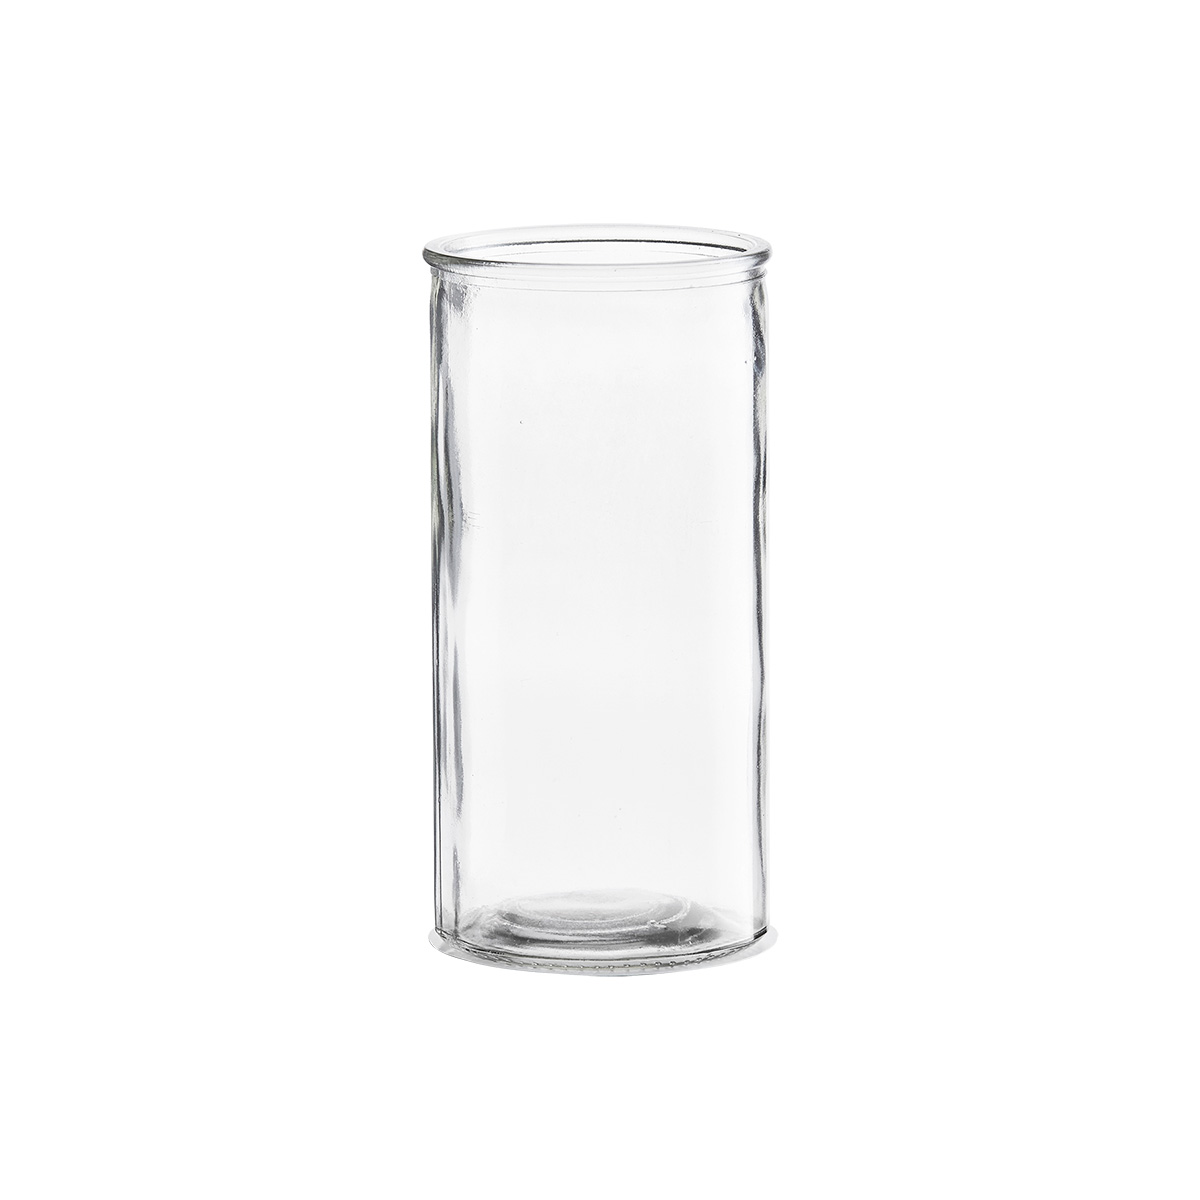 House Doctor - Vas, Cylinder, Klar, Ø: 10 Cm, H: 20 Cm